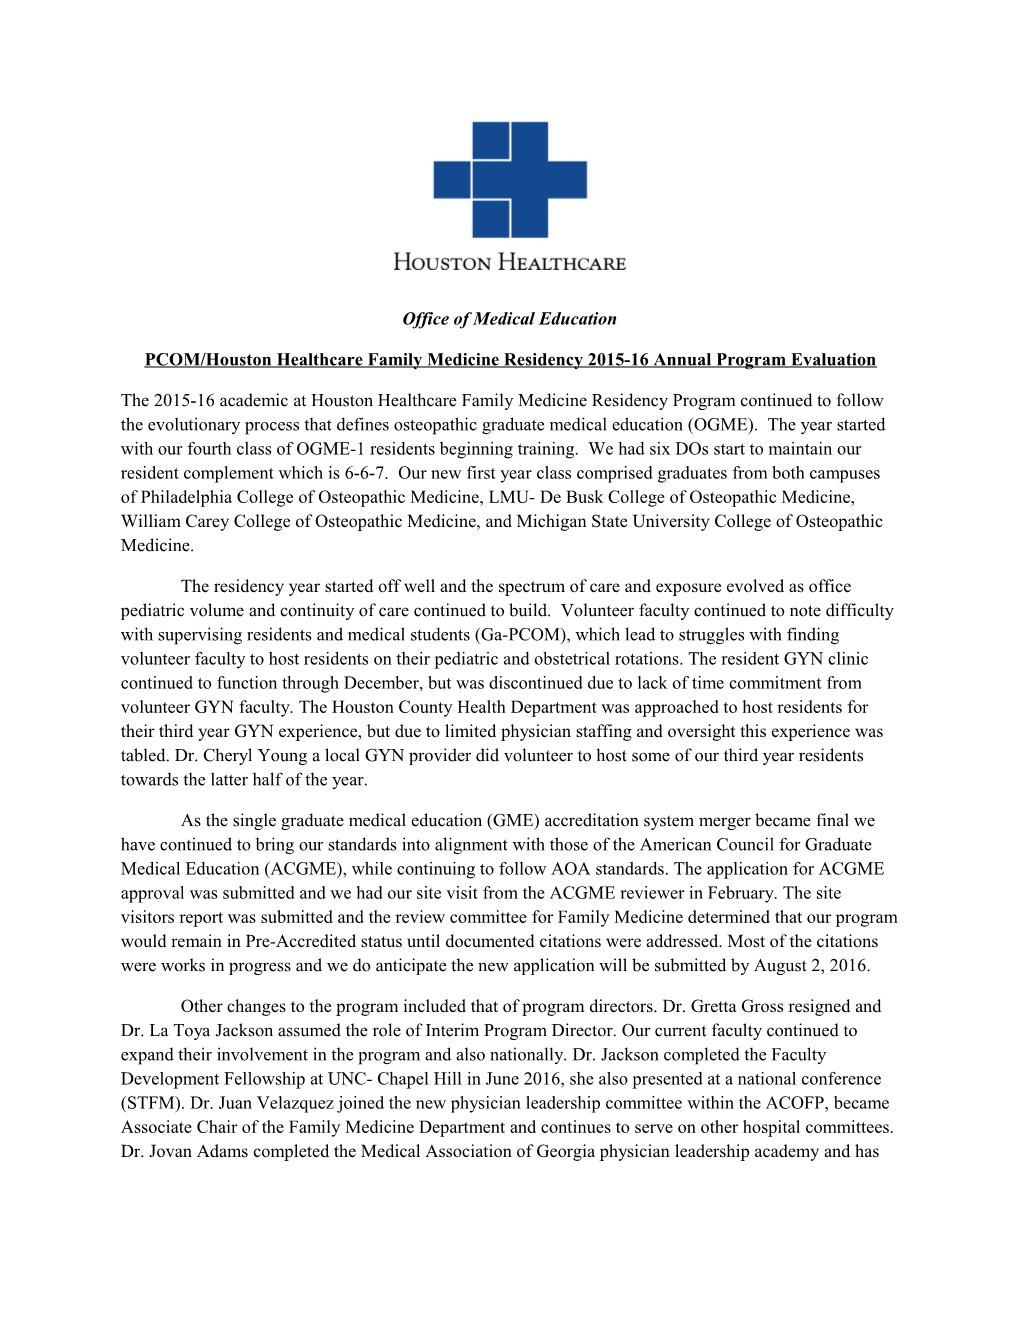 PCOM/Houston Healthcare Family Medicine Residency 2015-16 Annual Program Evaluation